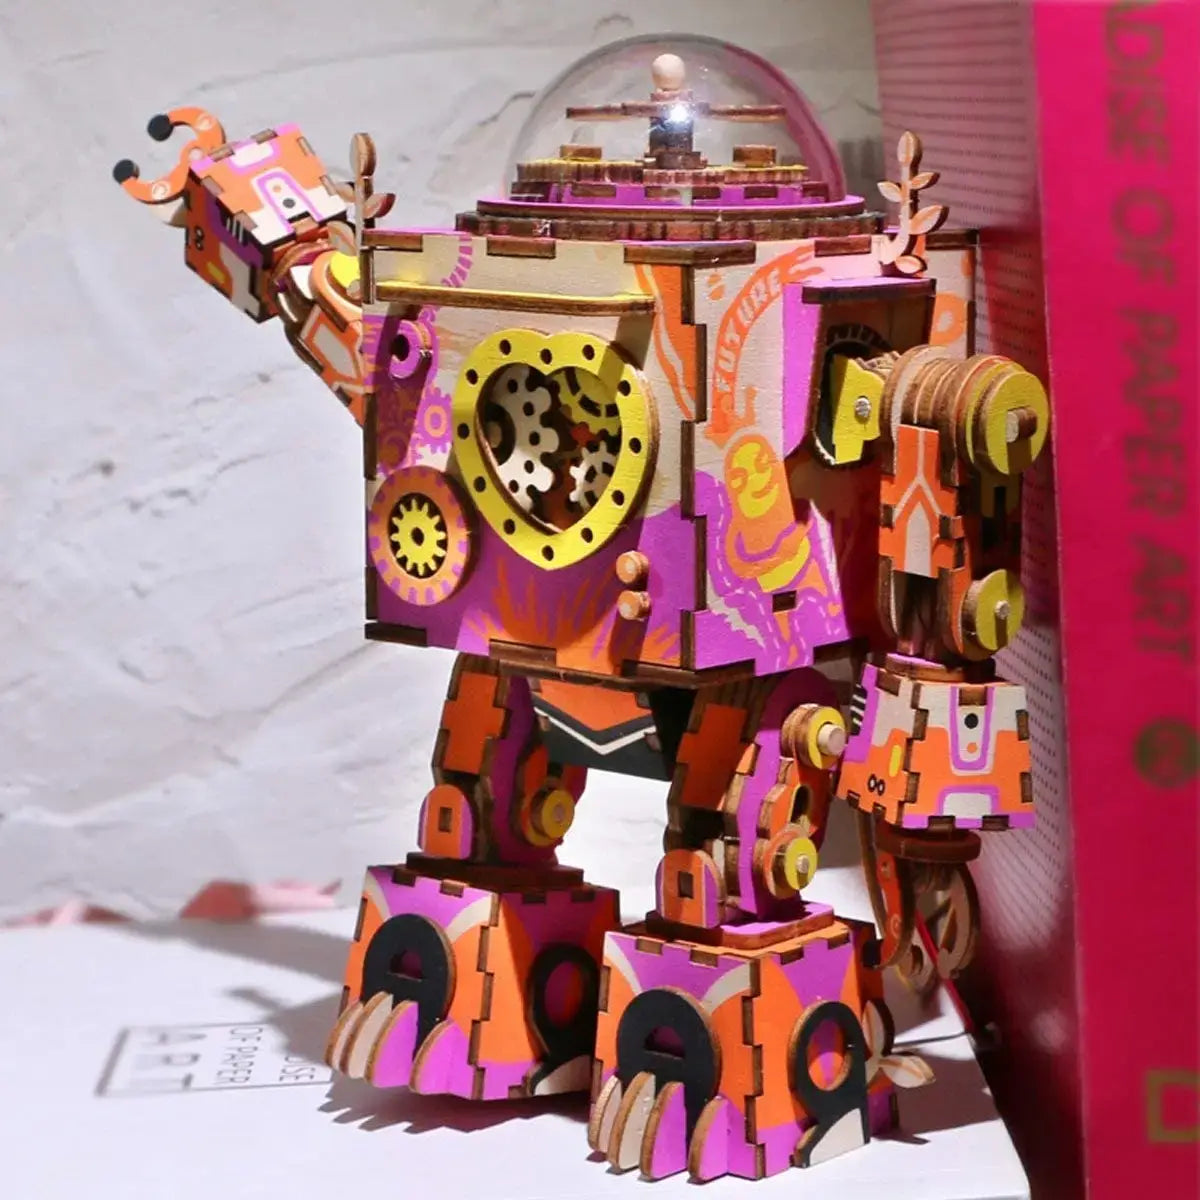 3D Holzpuzzle Morpheus Der Mechanische Roboter